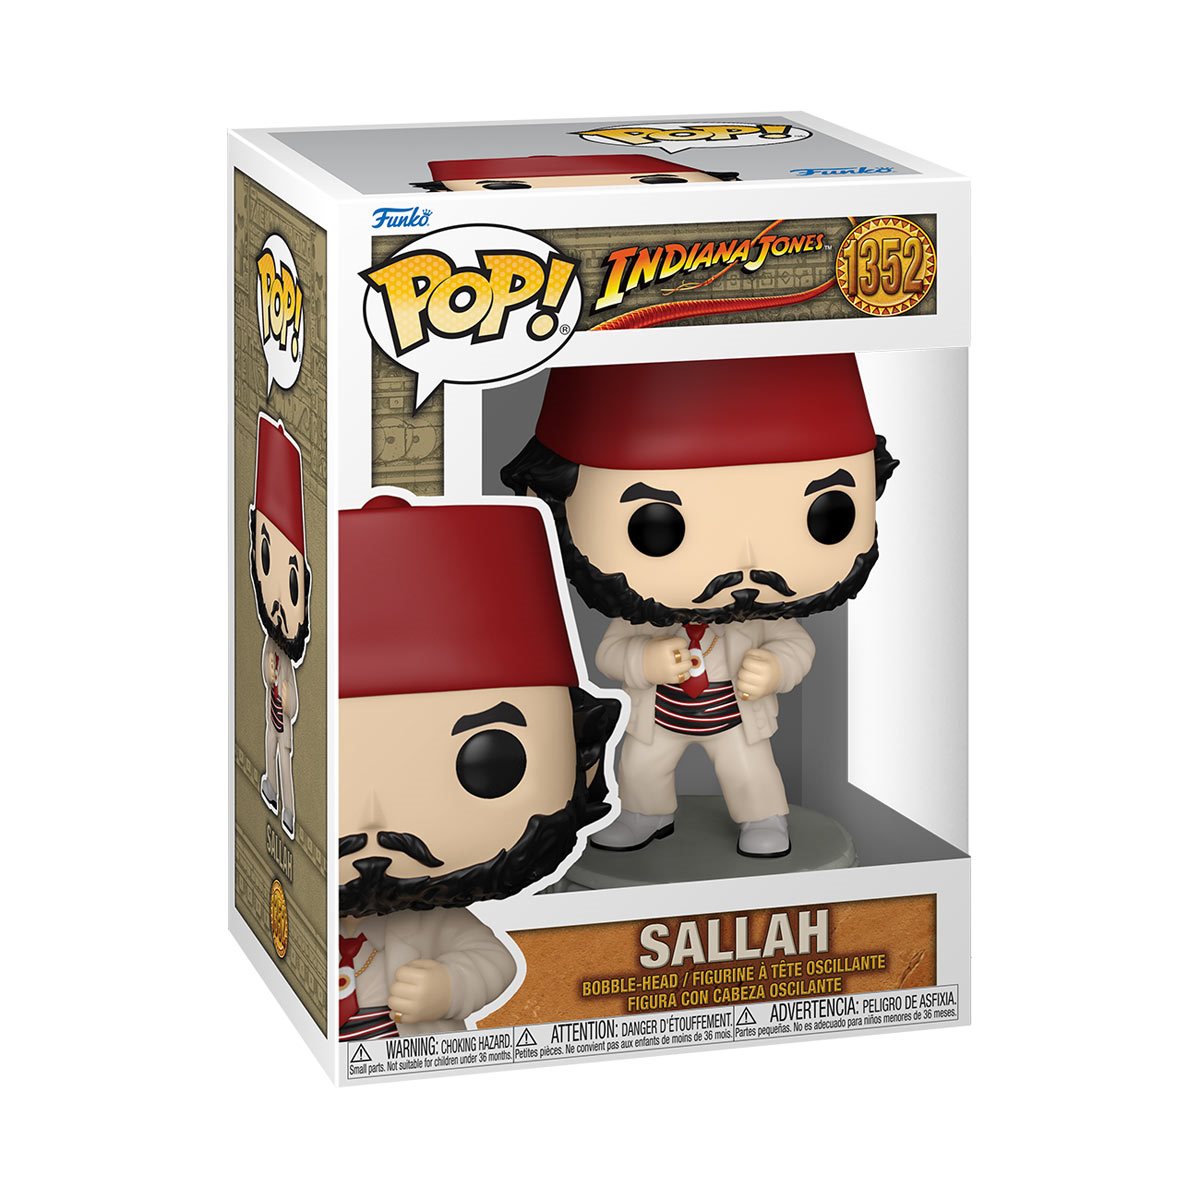 Sallah Pop! Vinyl Figure #1352 - Experience the Last Crusade Adventure with Indiana Jones